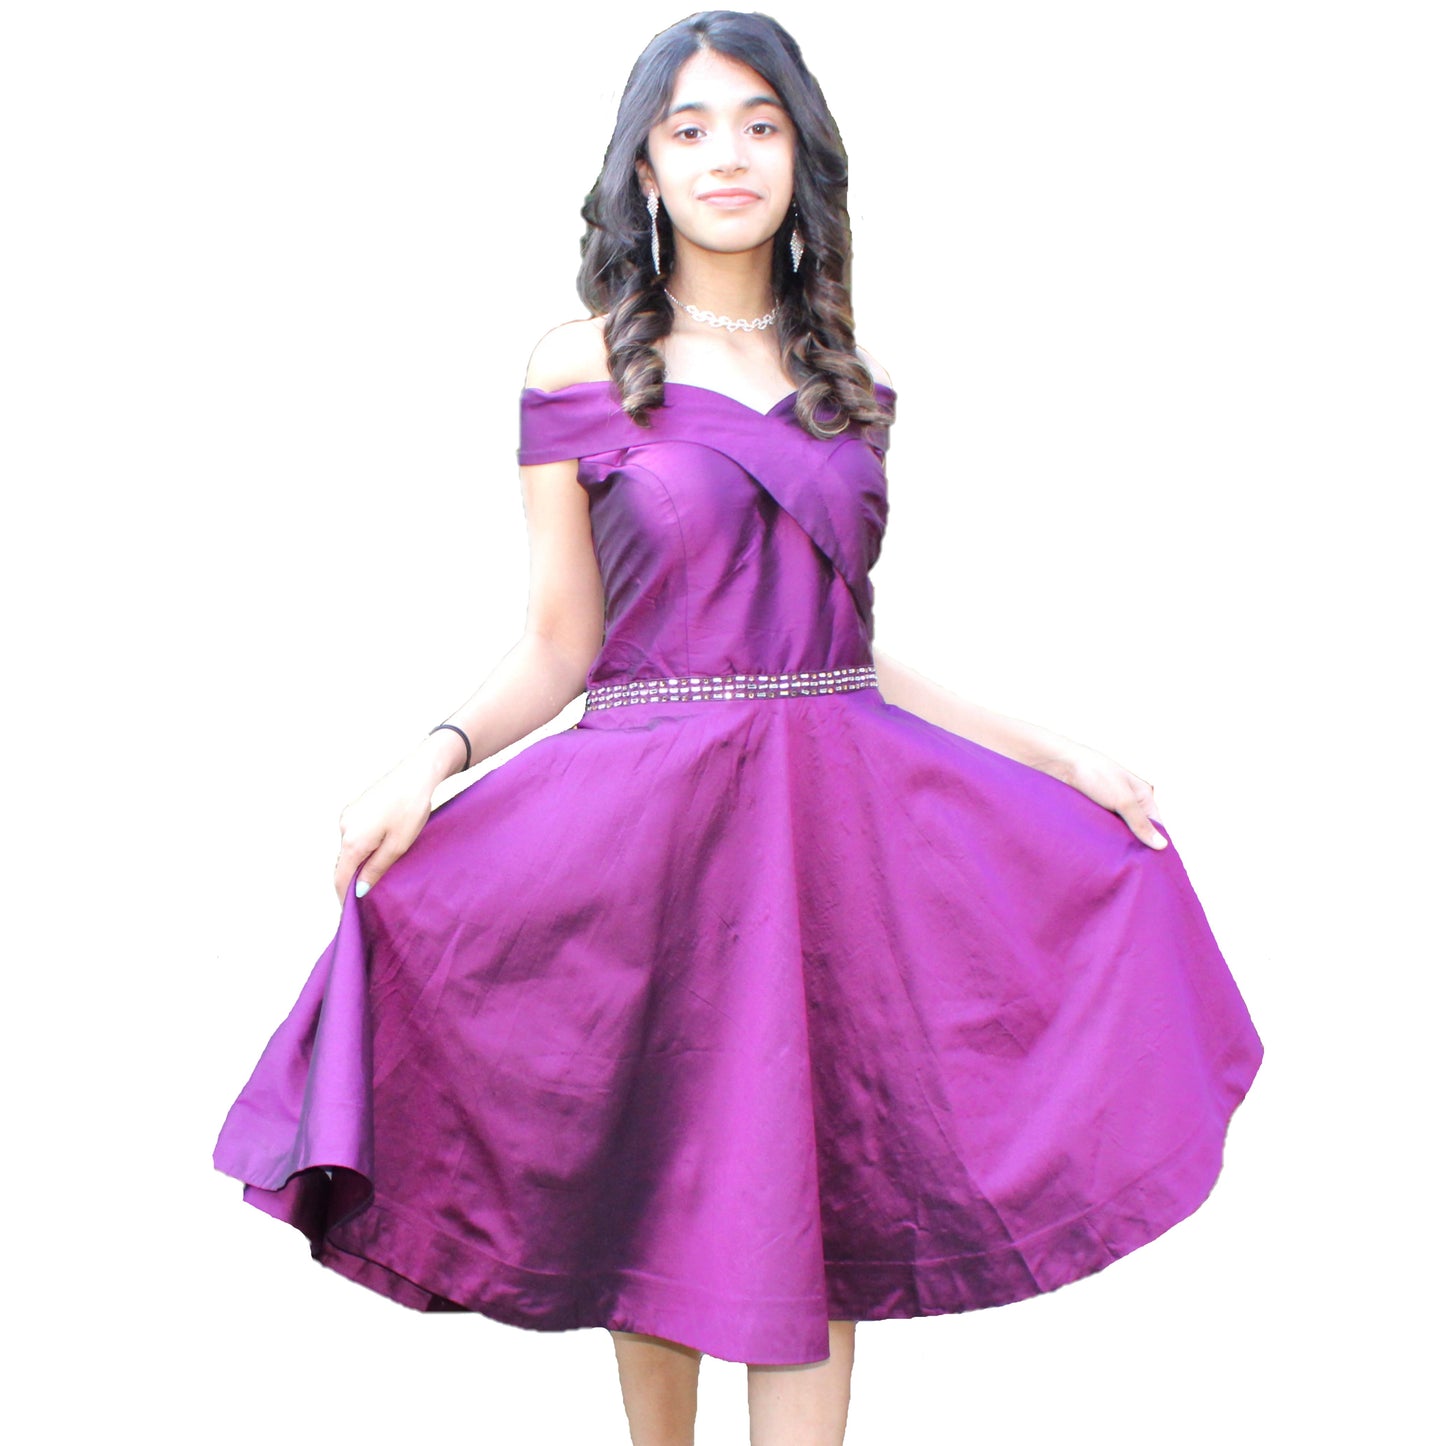 Maharani's Designer Short Formal Dress - Wine/Purple (M)